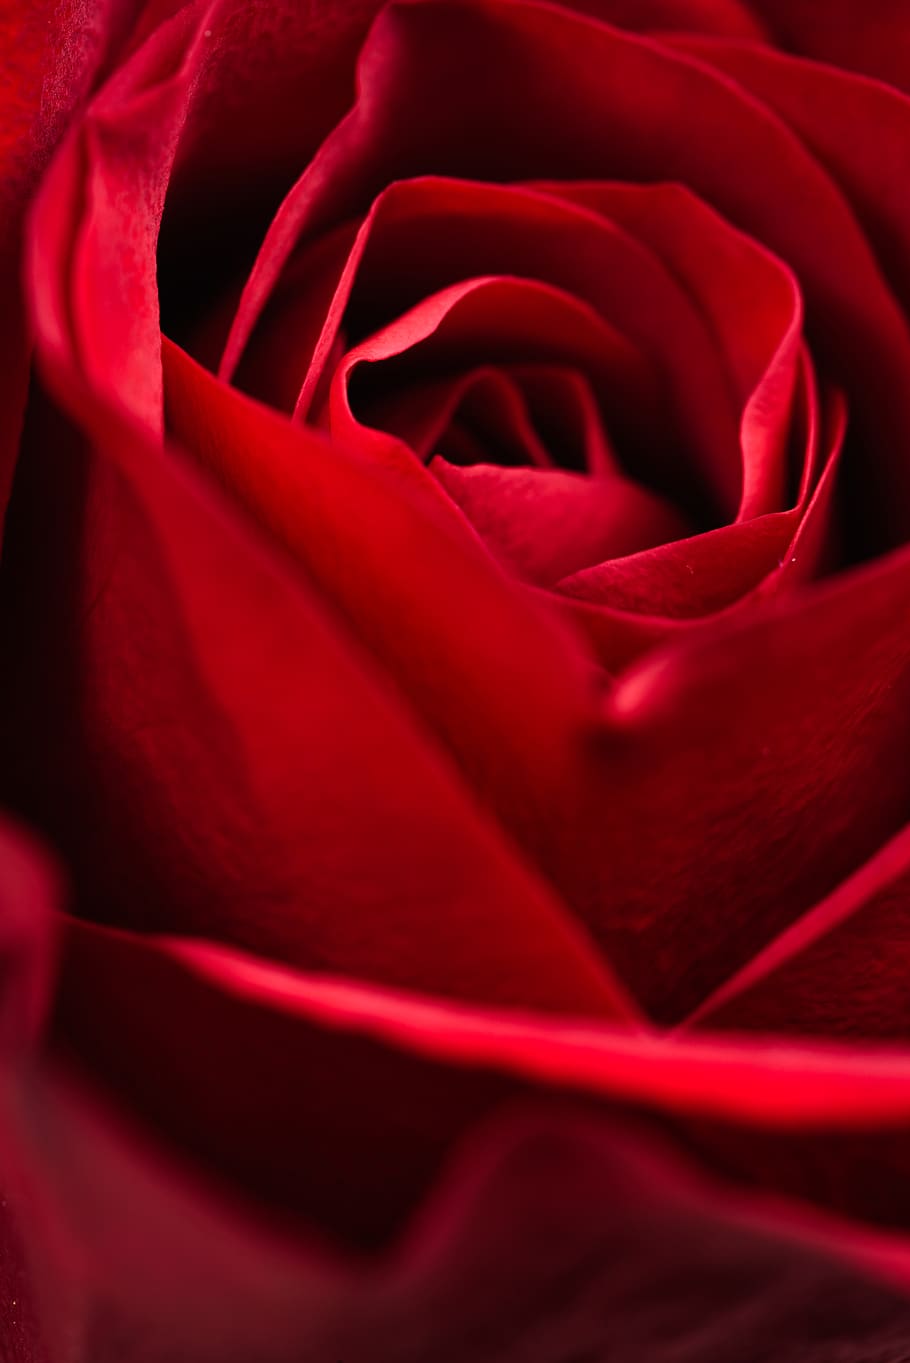 red, rose, macro, rose background, blossom, red rose, nature, romantic, closeup, rose petal